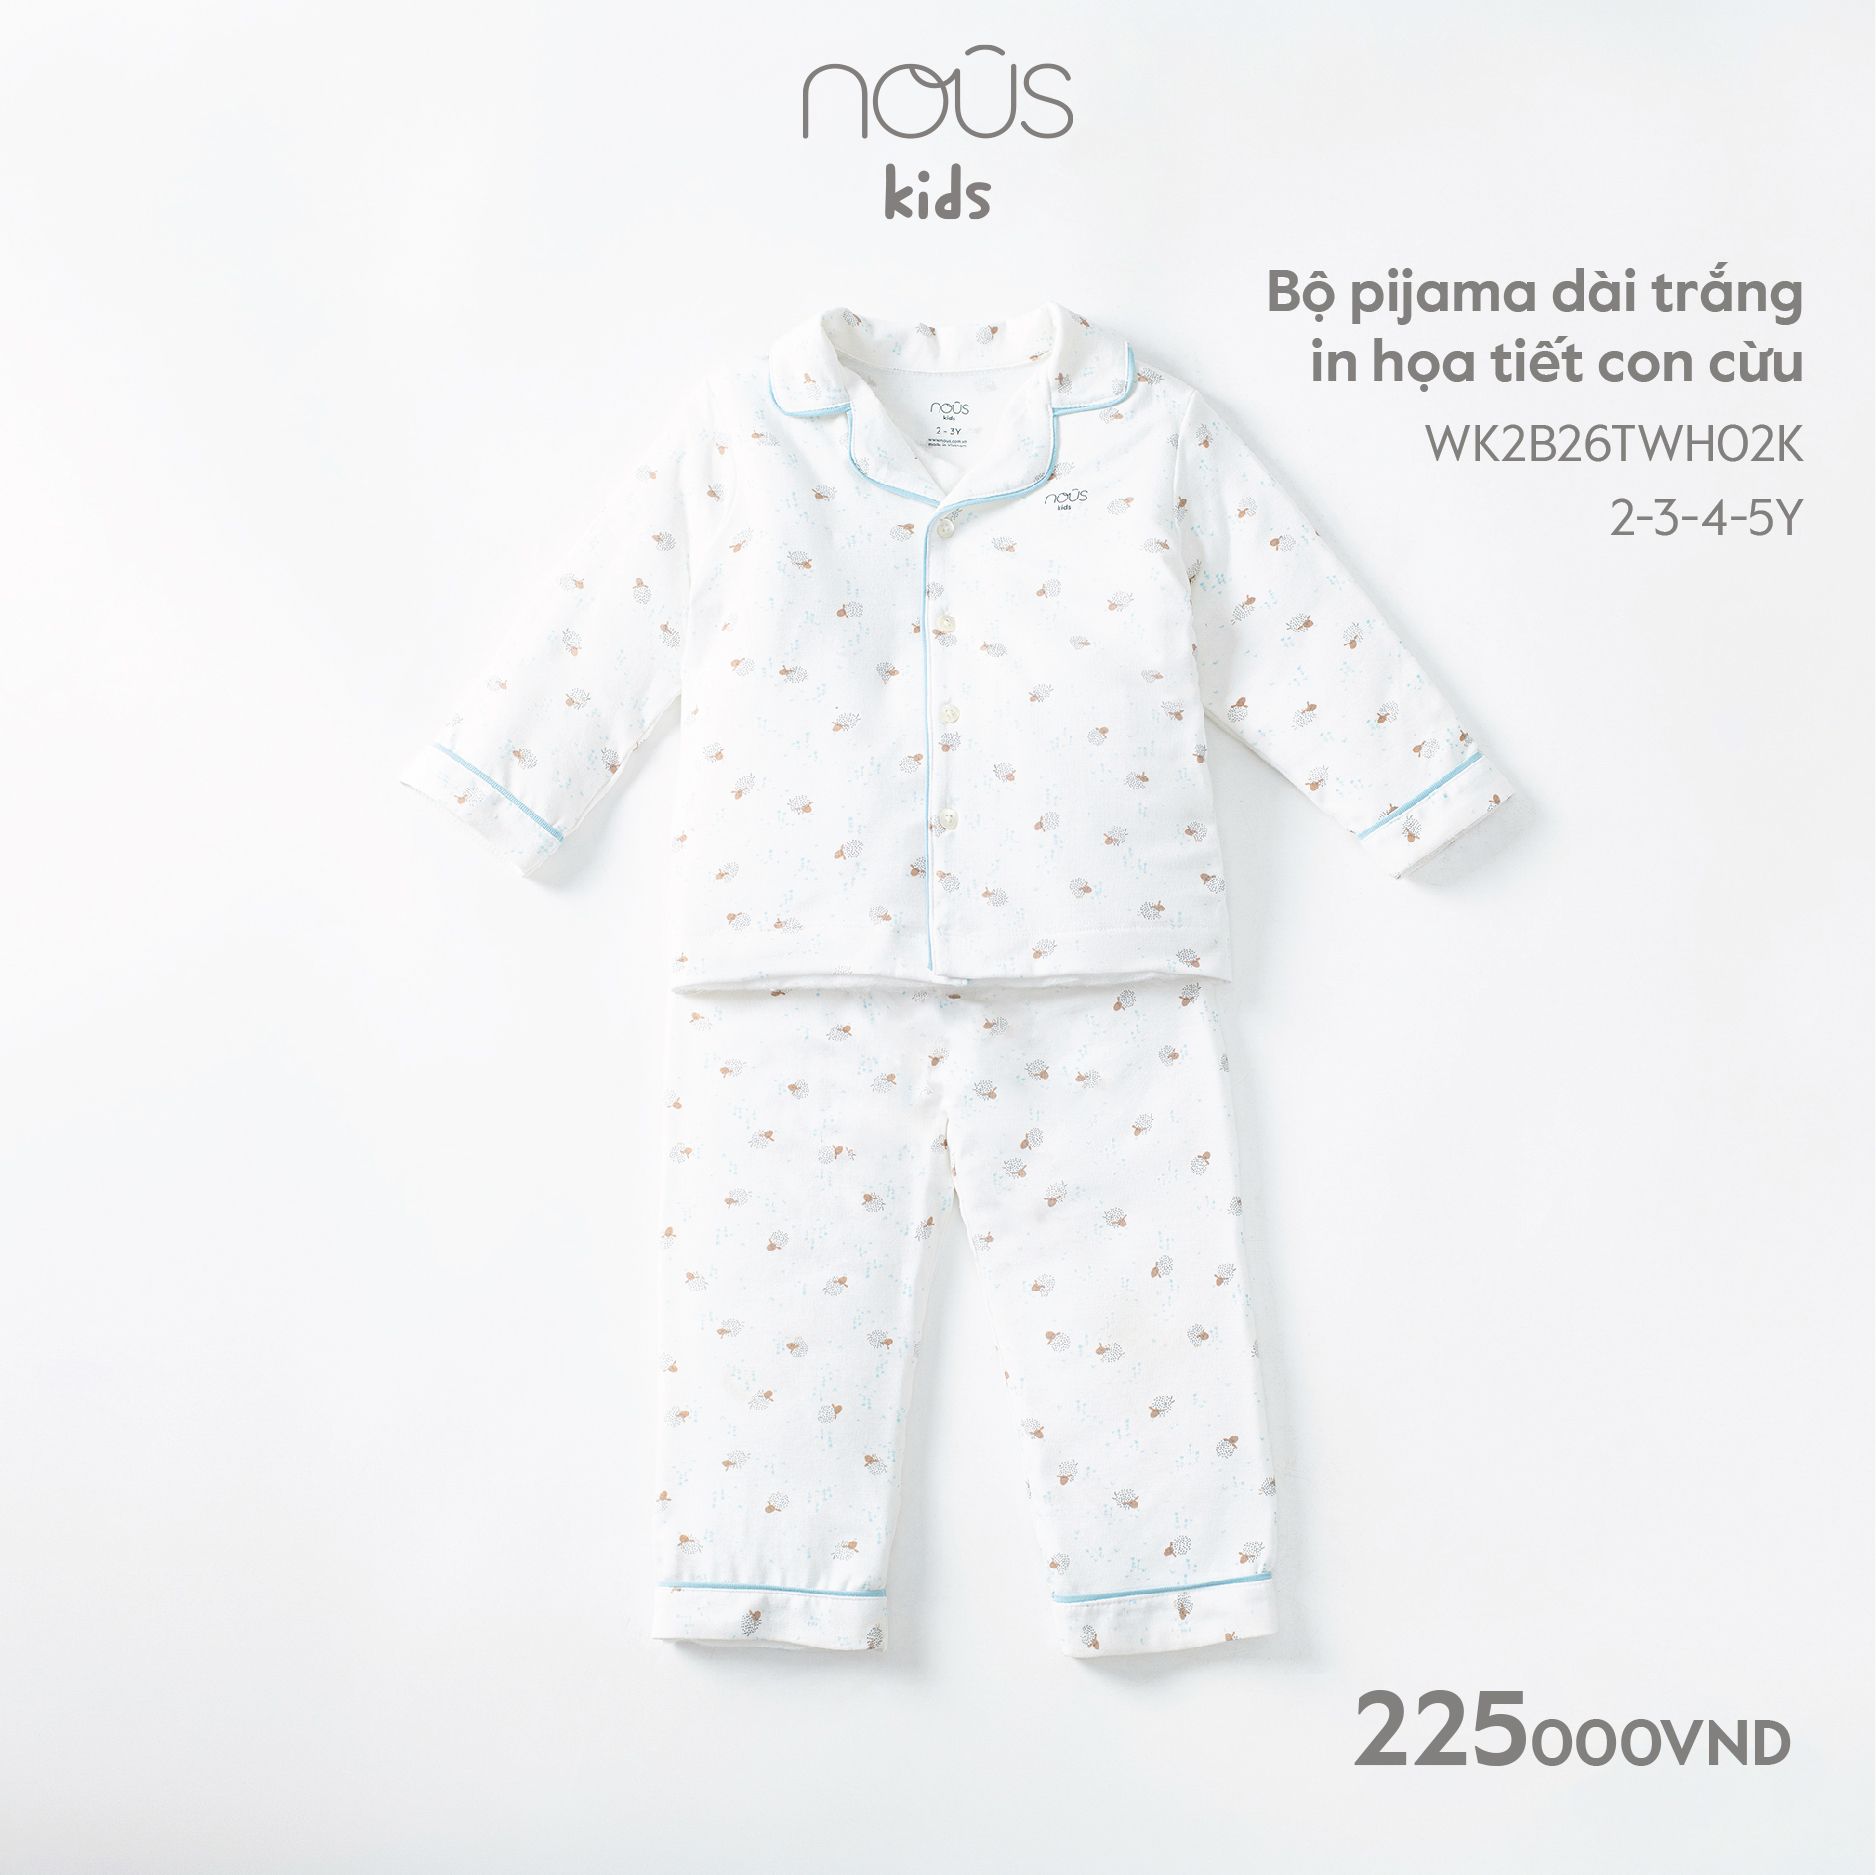  Bộ pijama dài trắng in họa tiết con cừu Nous Kids 2022 